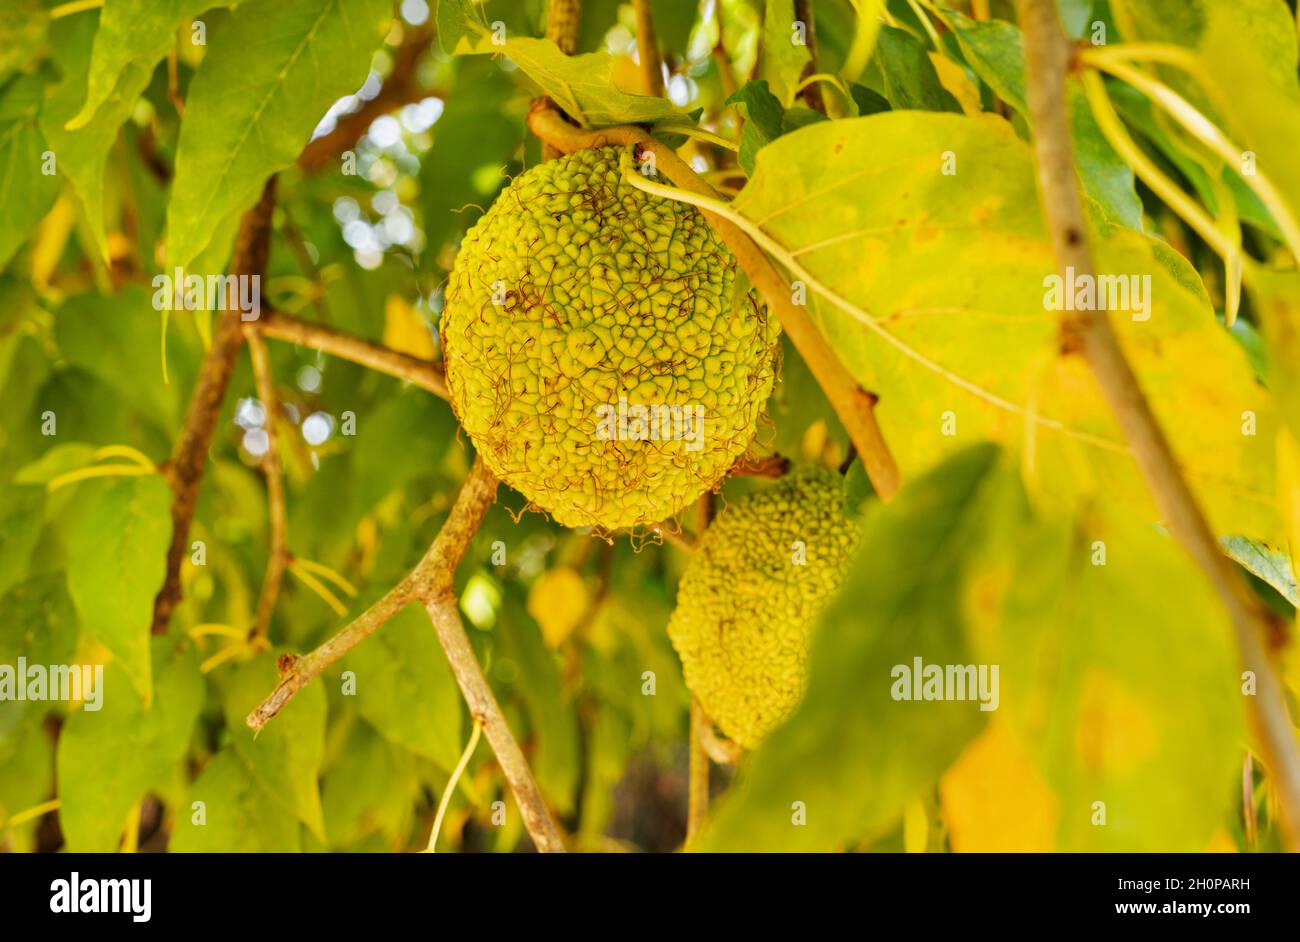 Bright  fruits of osage orange tree , maclura pomifera or horse apple or hedge apple ,roughly spherical  yellow fruits Stock Photo